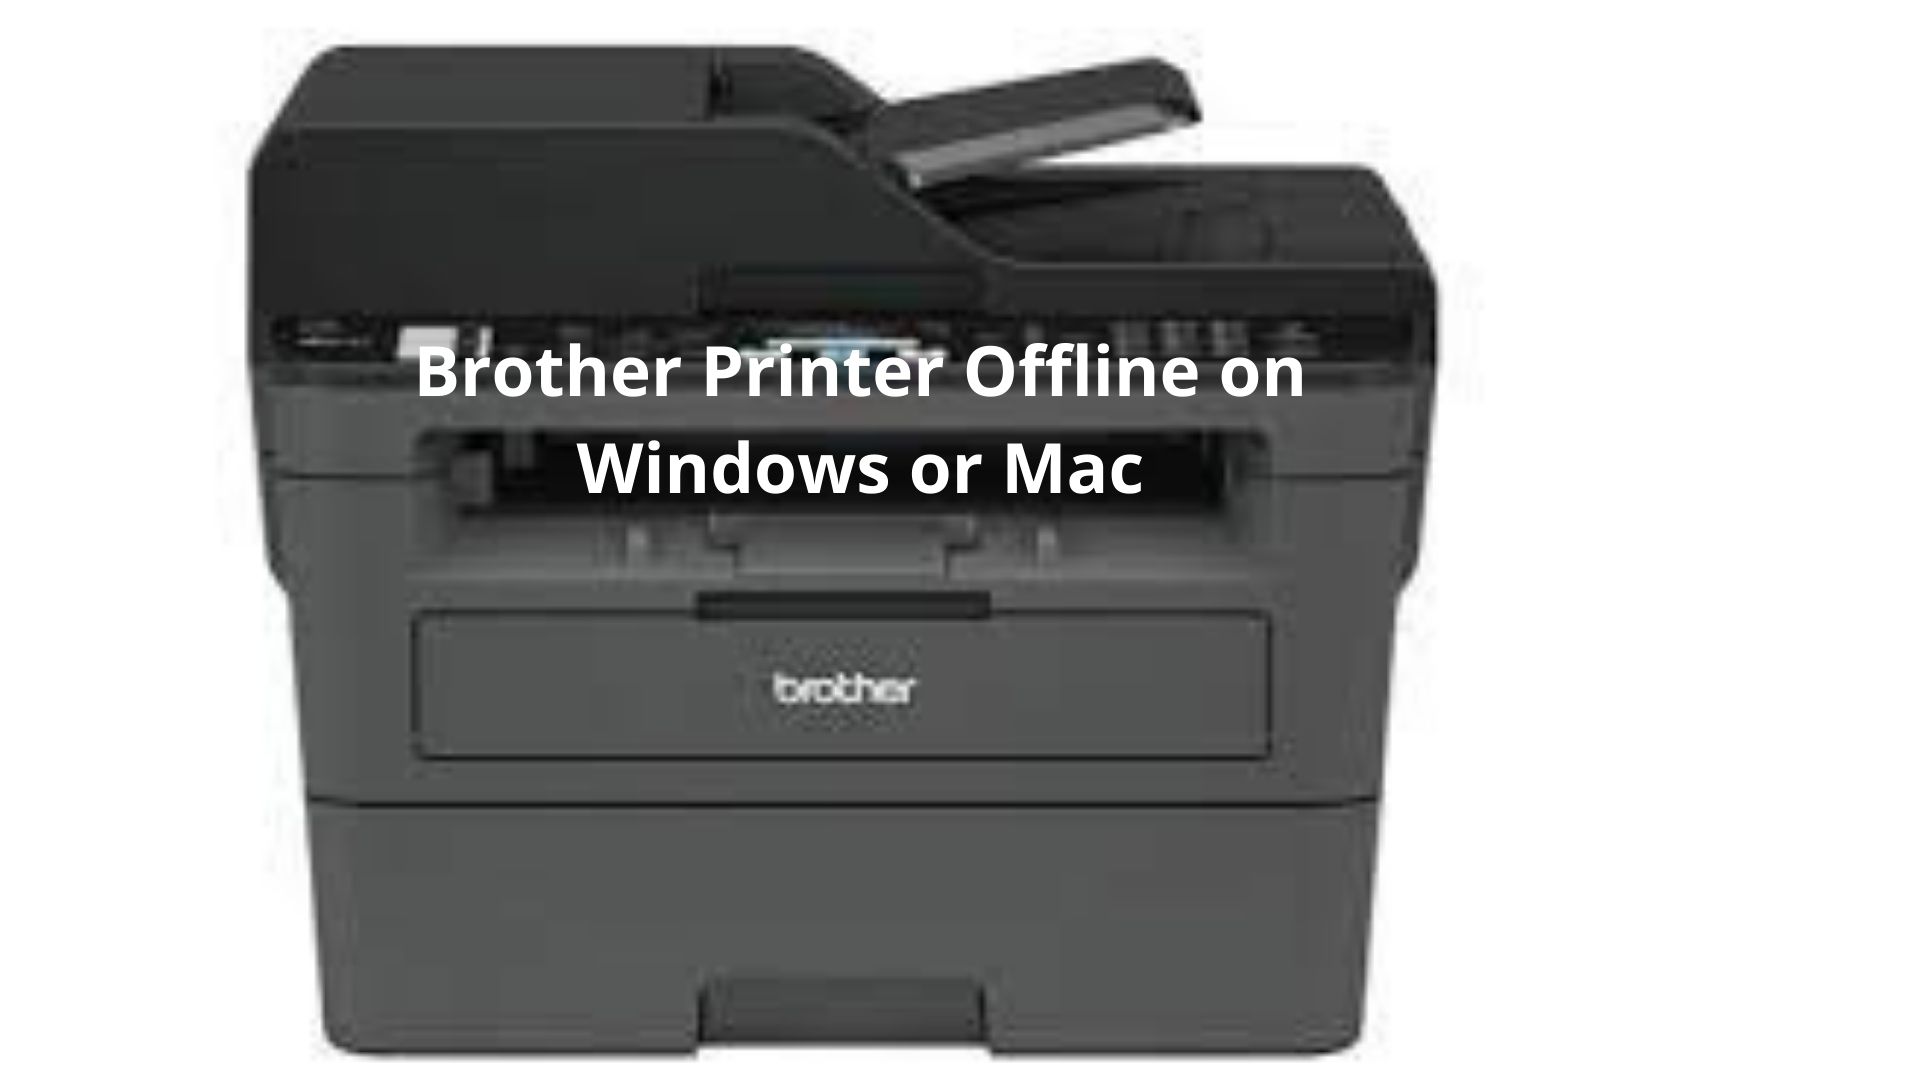 Brother Printer Offline on Windows or Mac